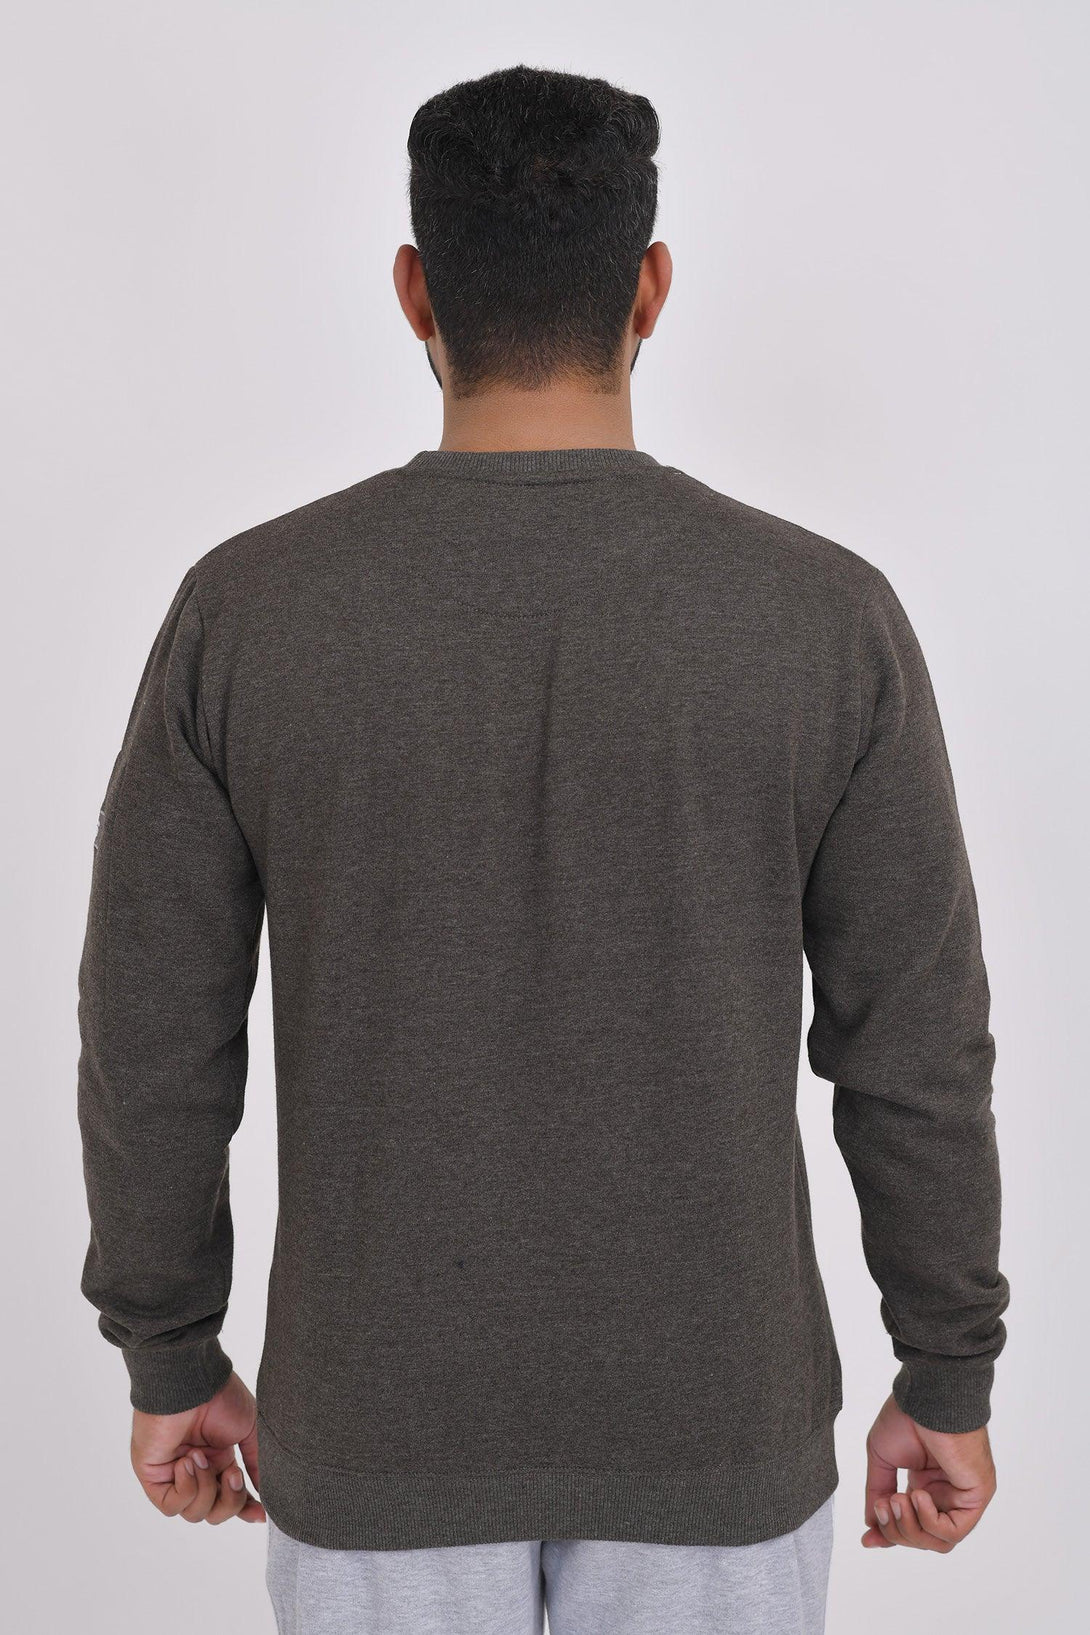 Sweatshirts Arm Zip | CHARCOAL - FTS